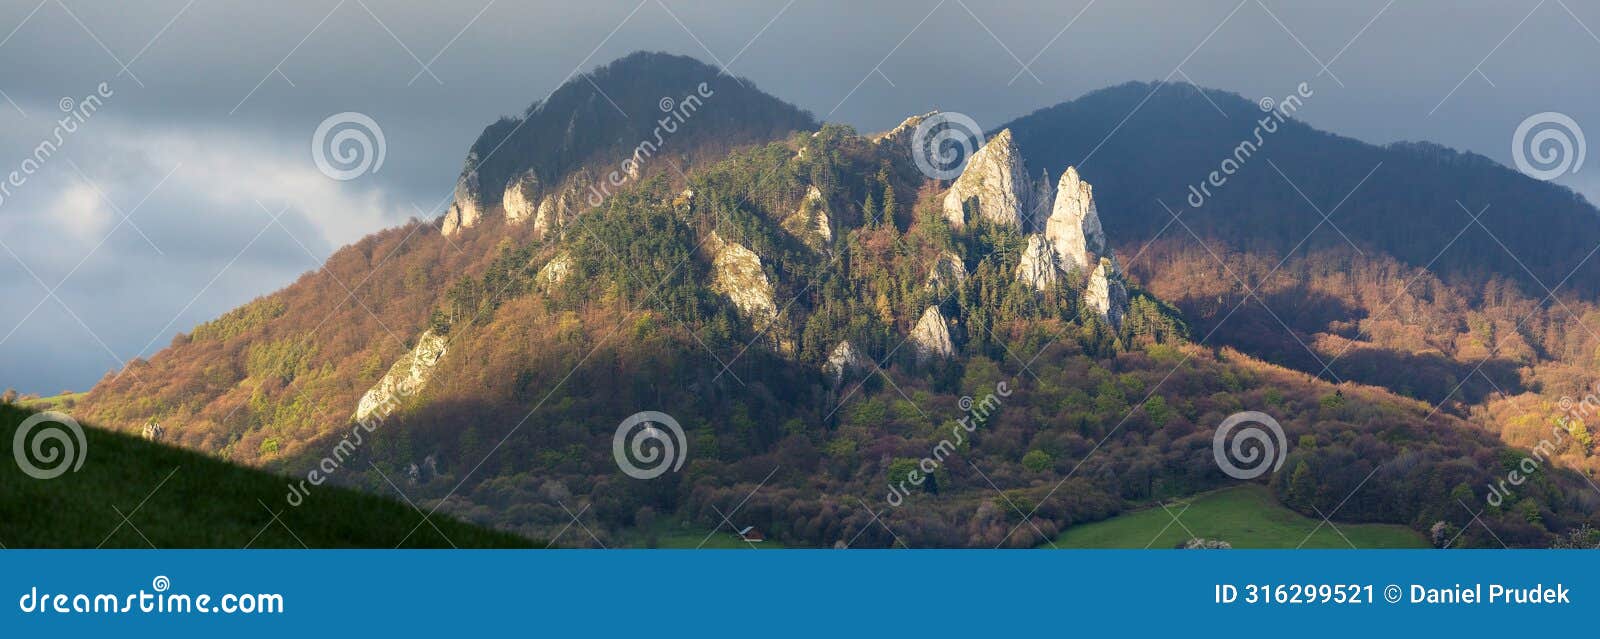 mount vrsatec, carpathian mountains, slovakia